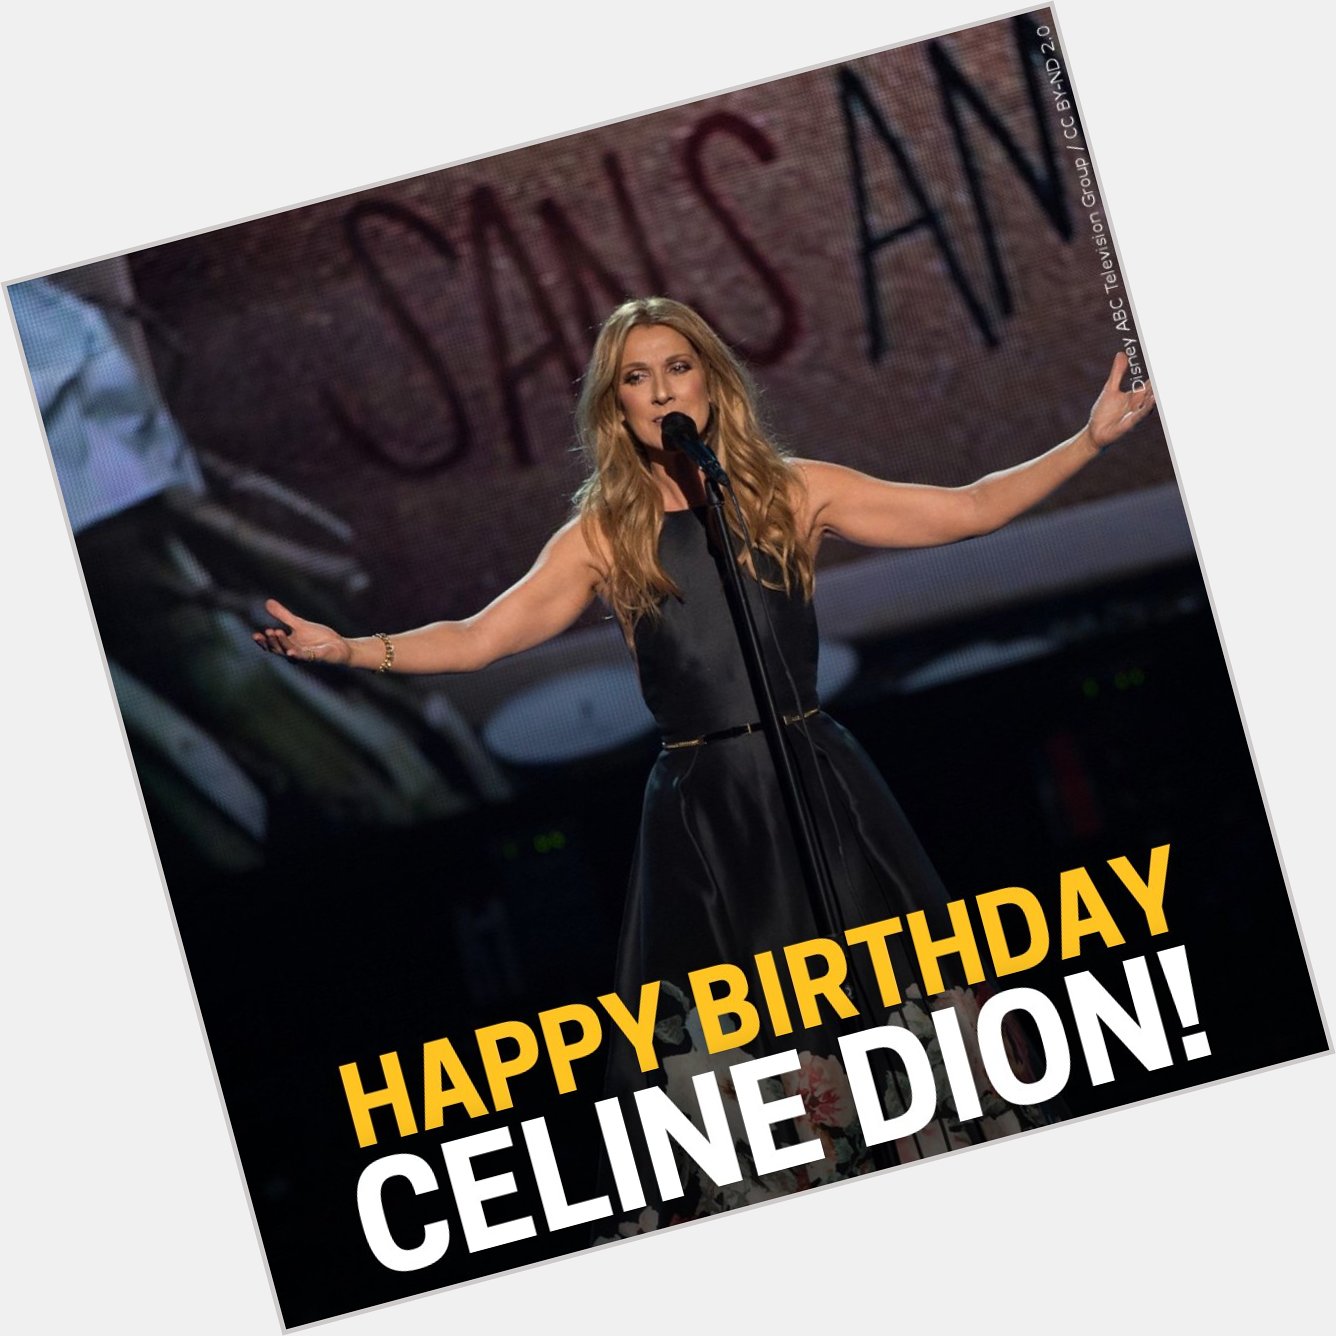 HAPPY BIRTHDAY! Celine Dion turns 55 today! 